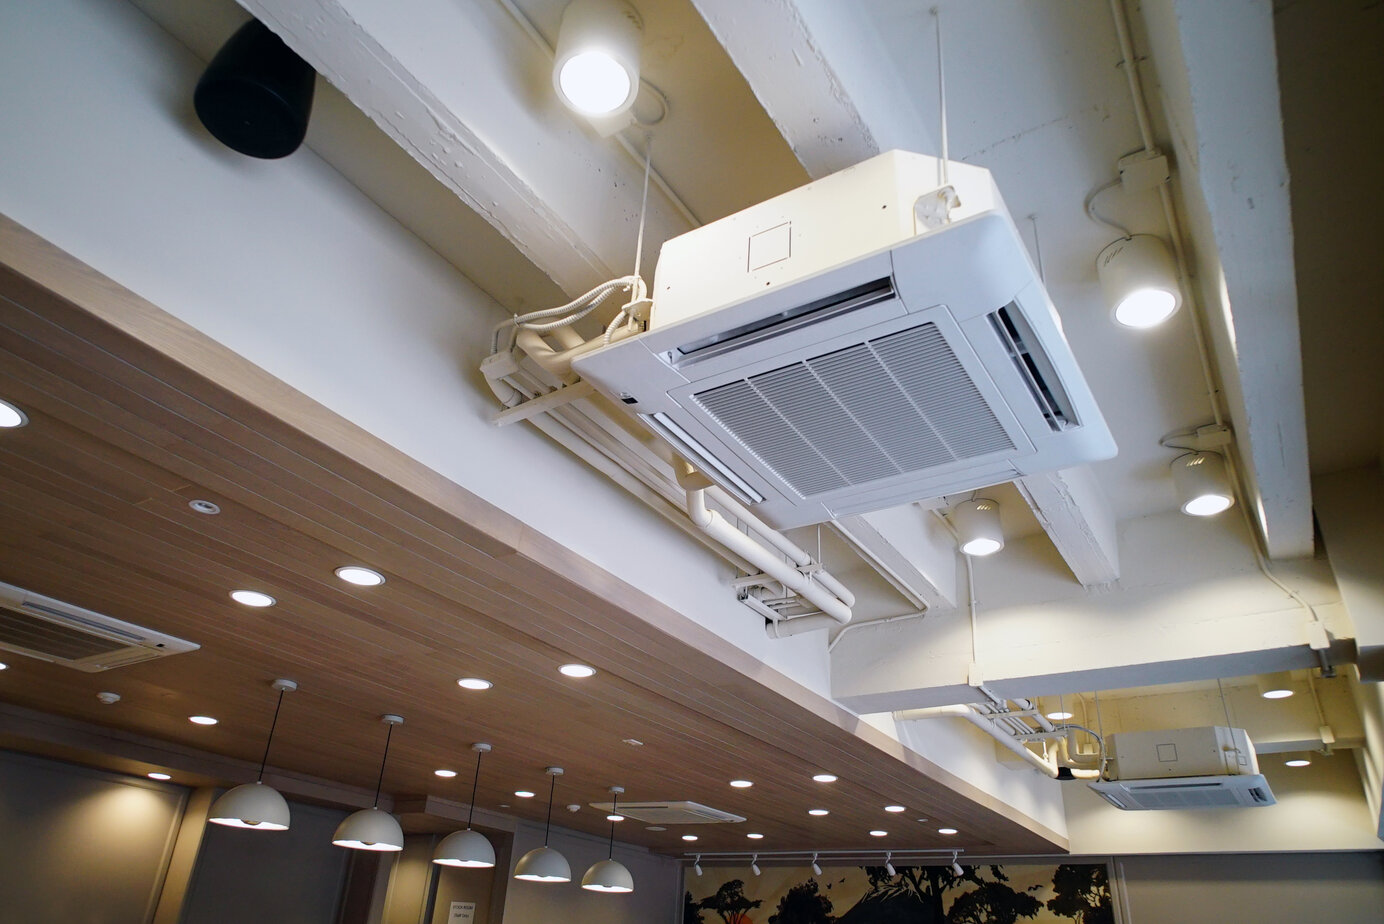 air conditioning unit.jpg